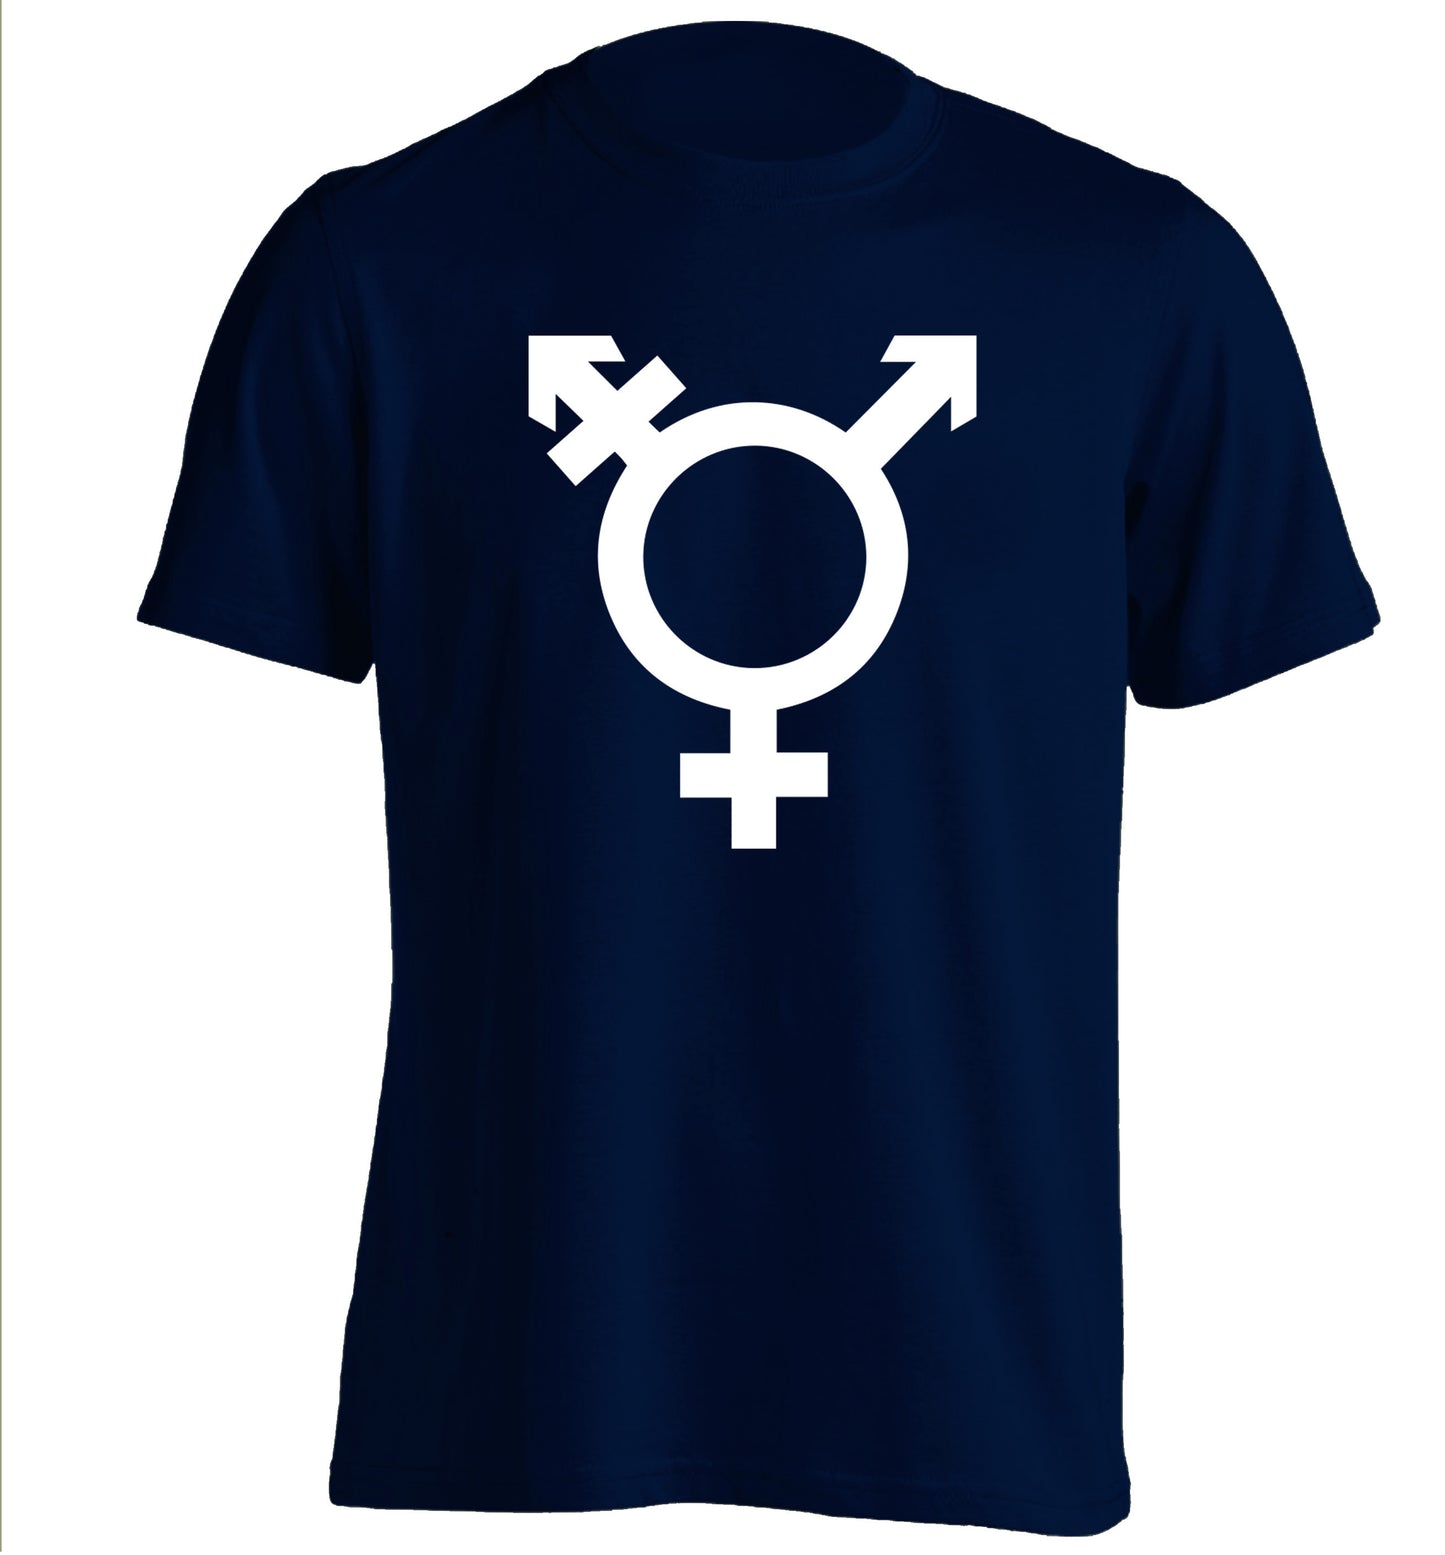 Gender neutral symbol large adults unisex navy Tshirt 2XL